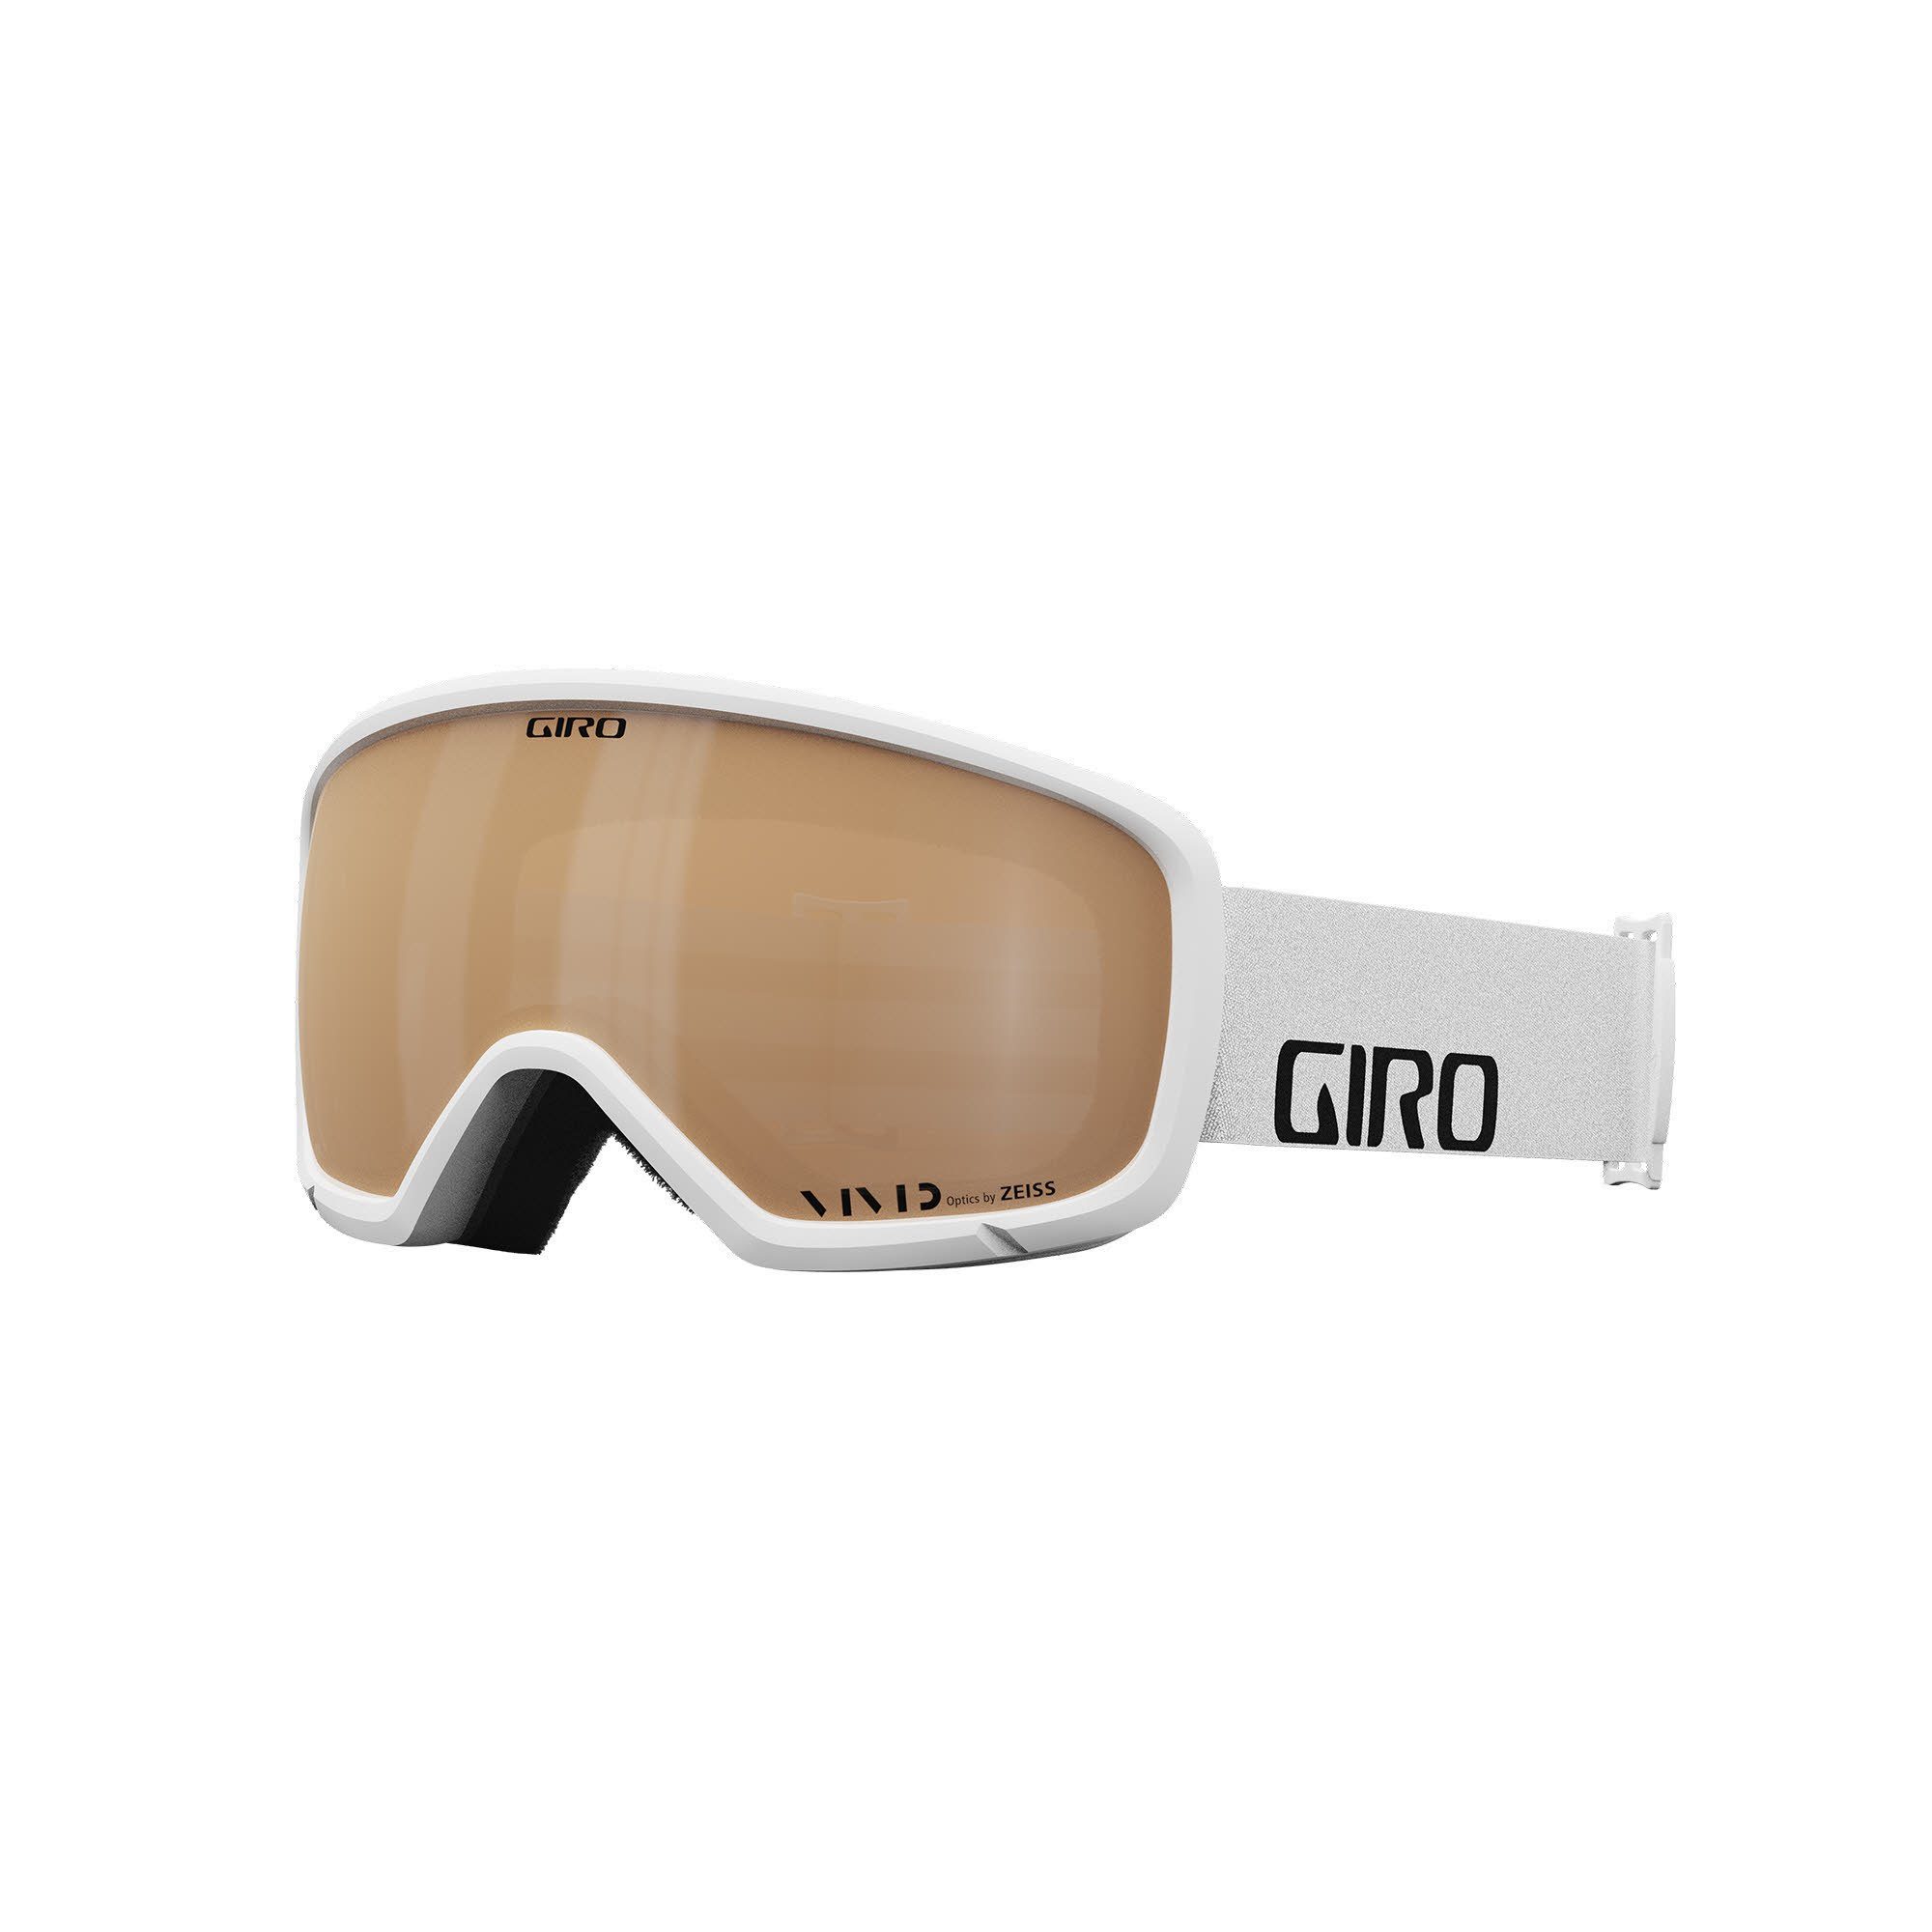 Giro Skibrille (10) weiss